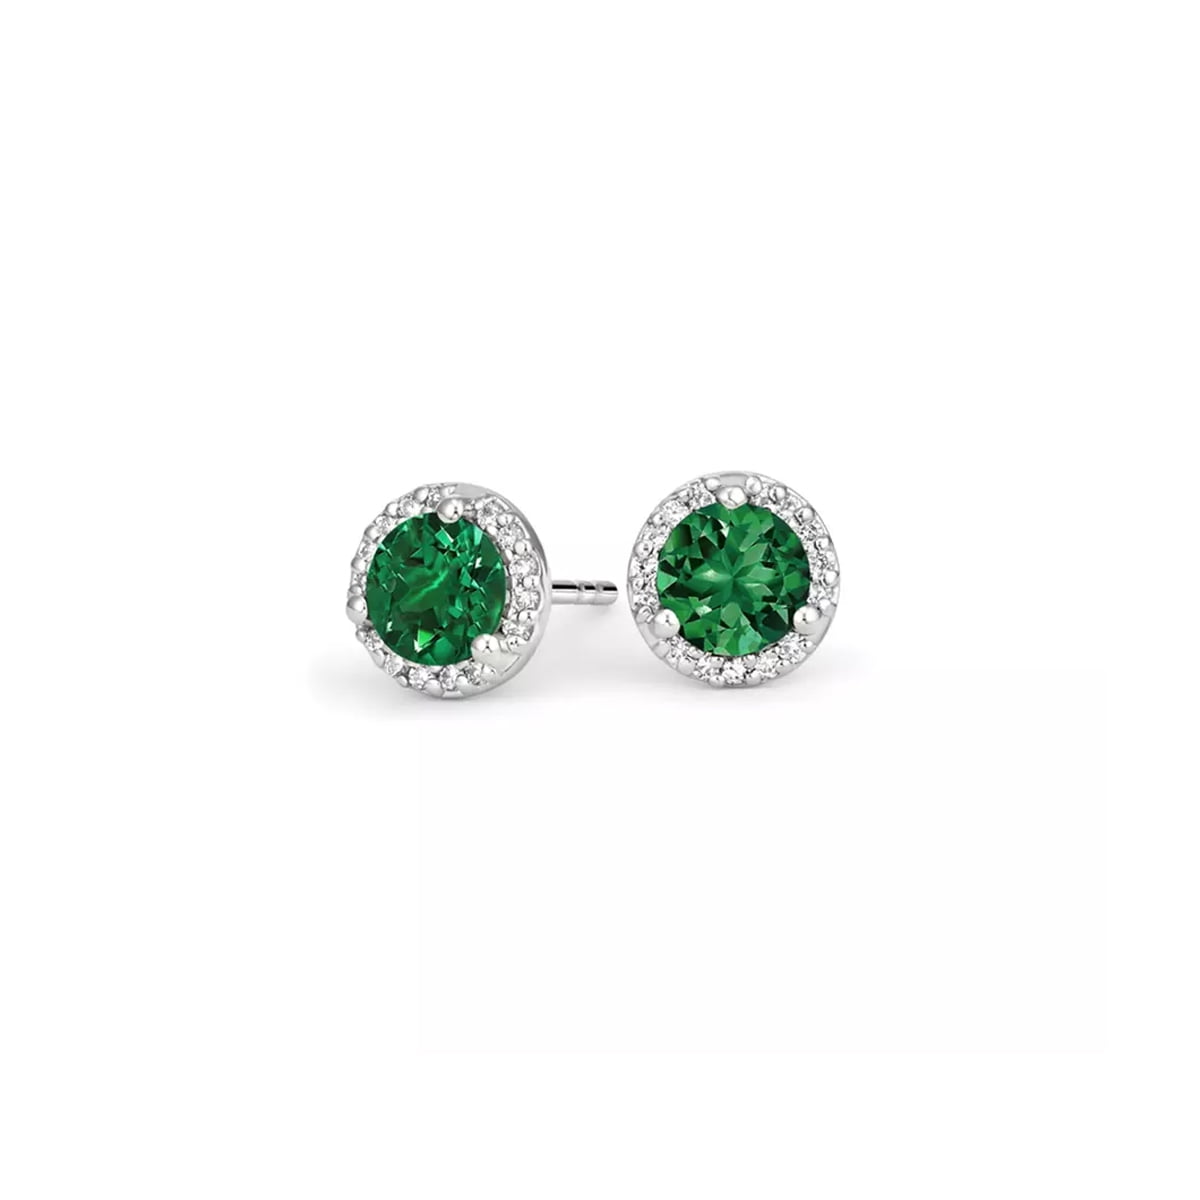 Vintage Style Emerald Gemstones Earrings 18K White Gold Plated 